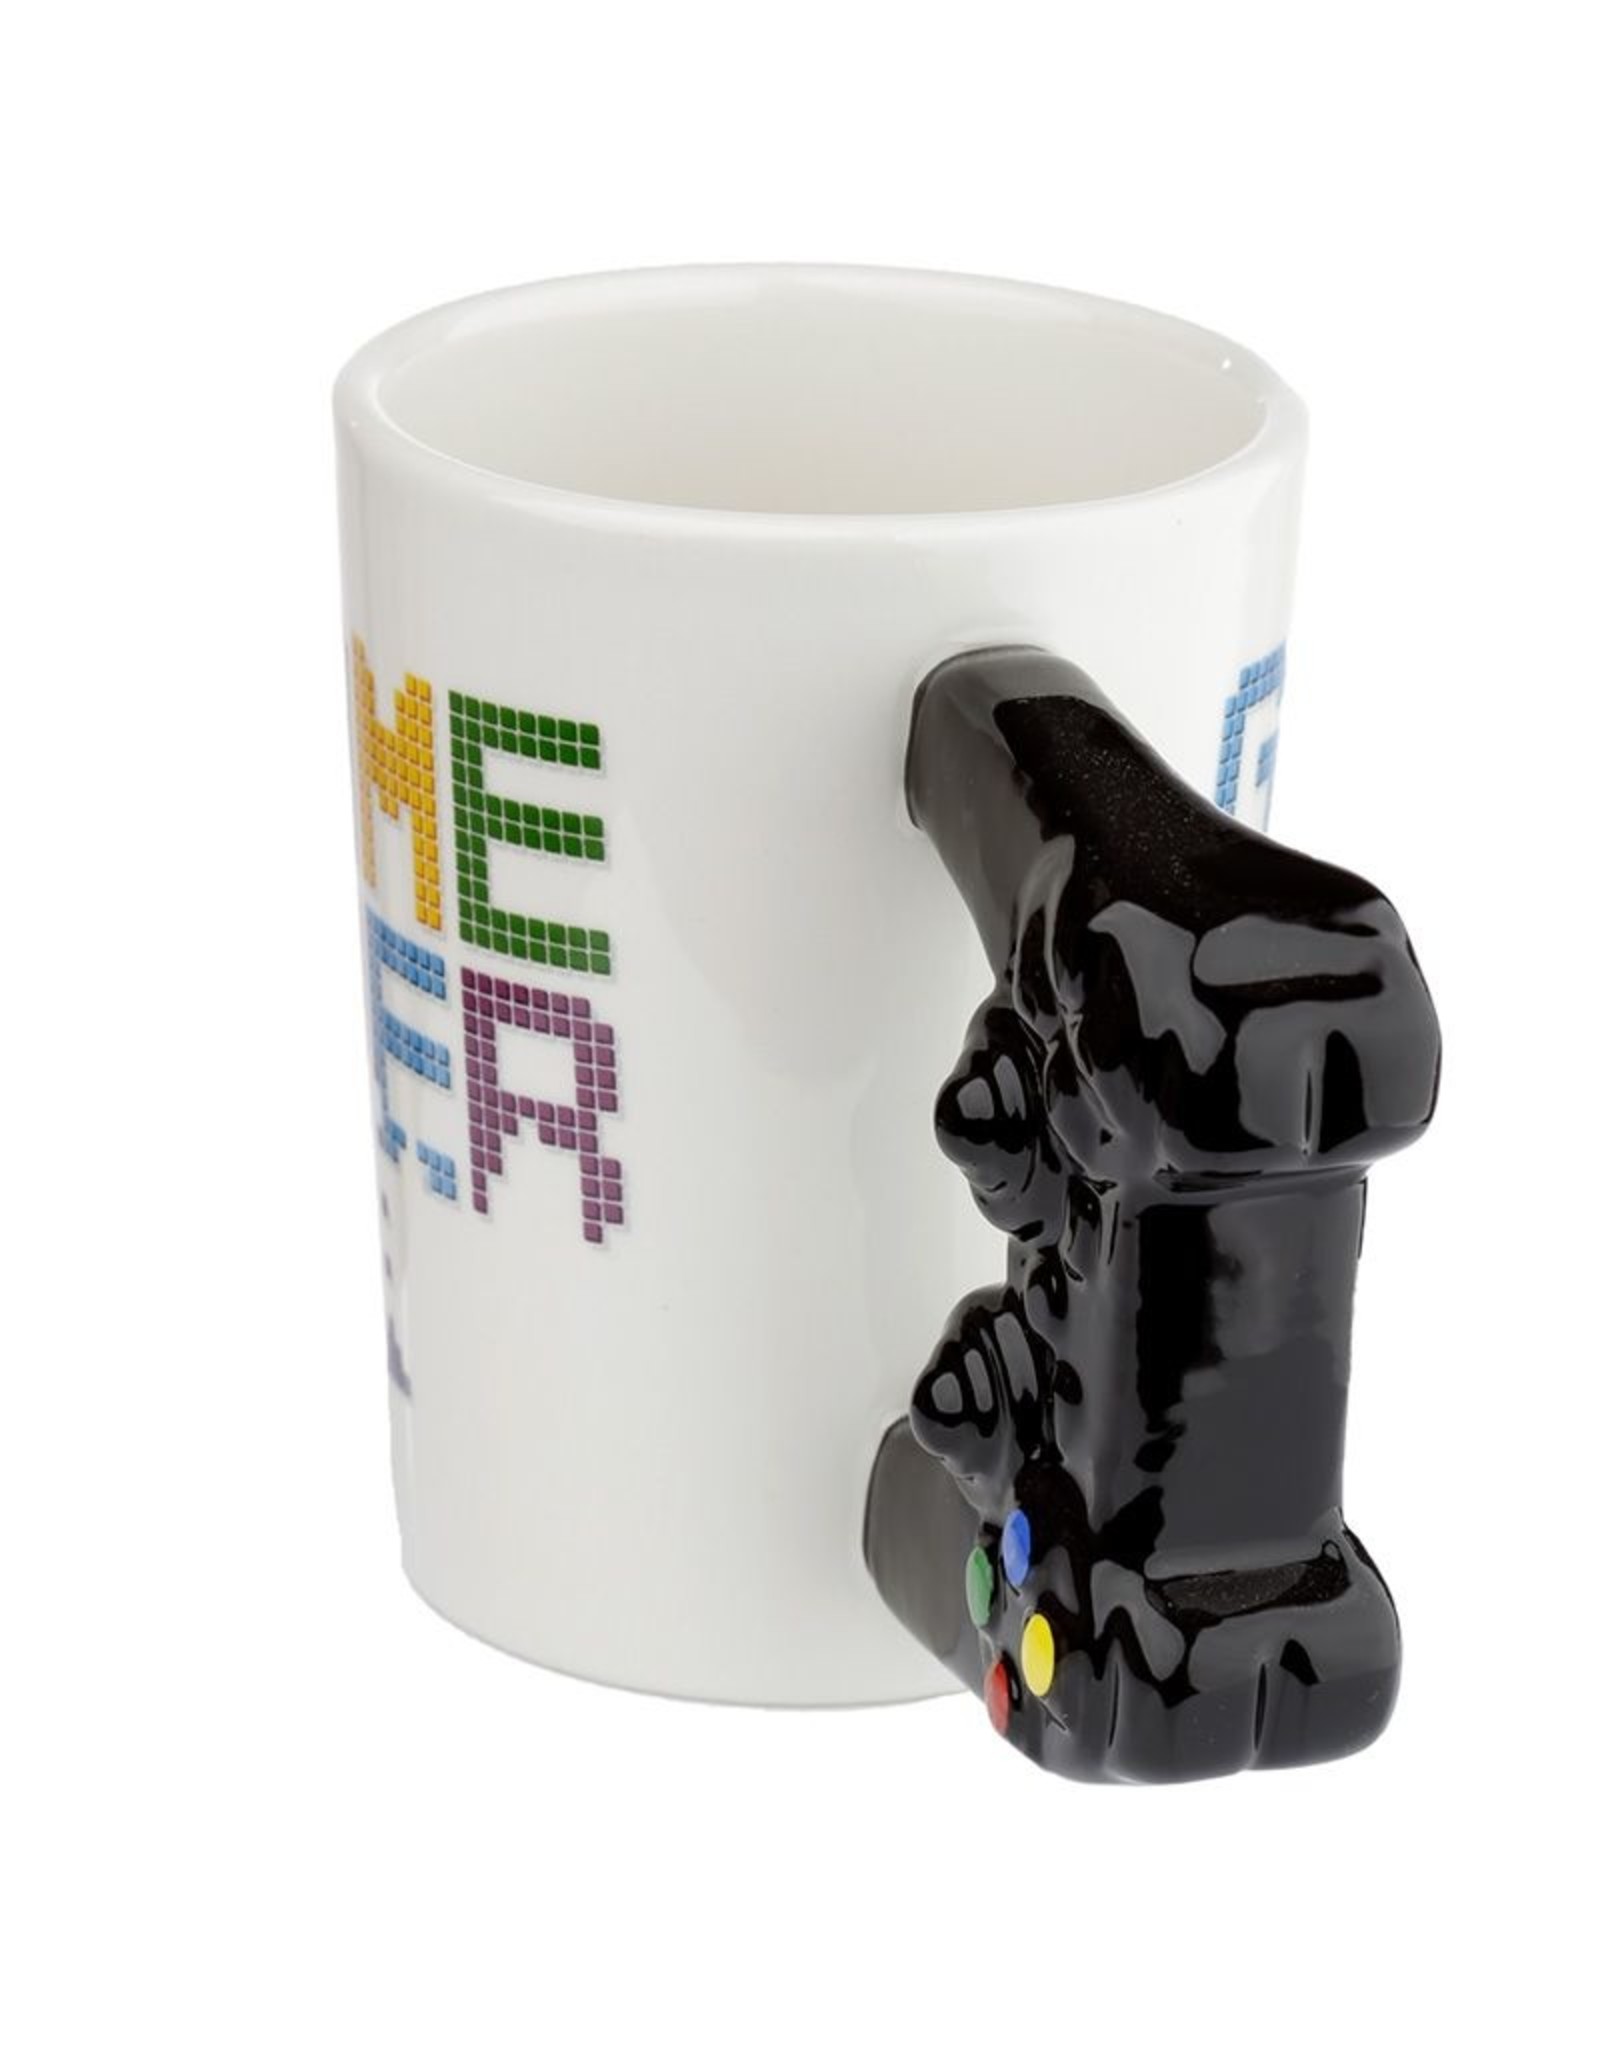 Puckator Drinkware - Game Over Ceramic Mug with Controller Handle